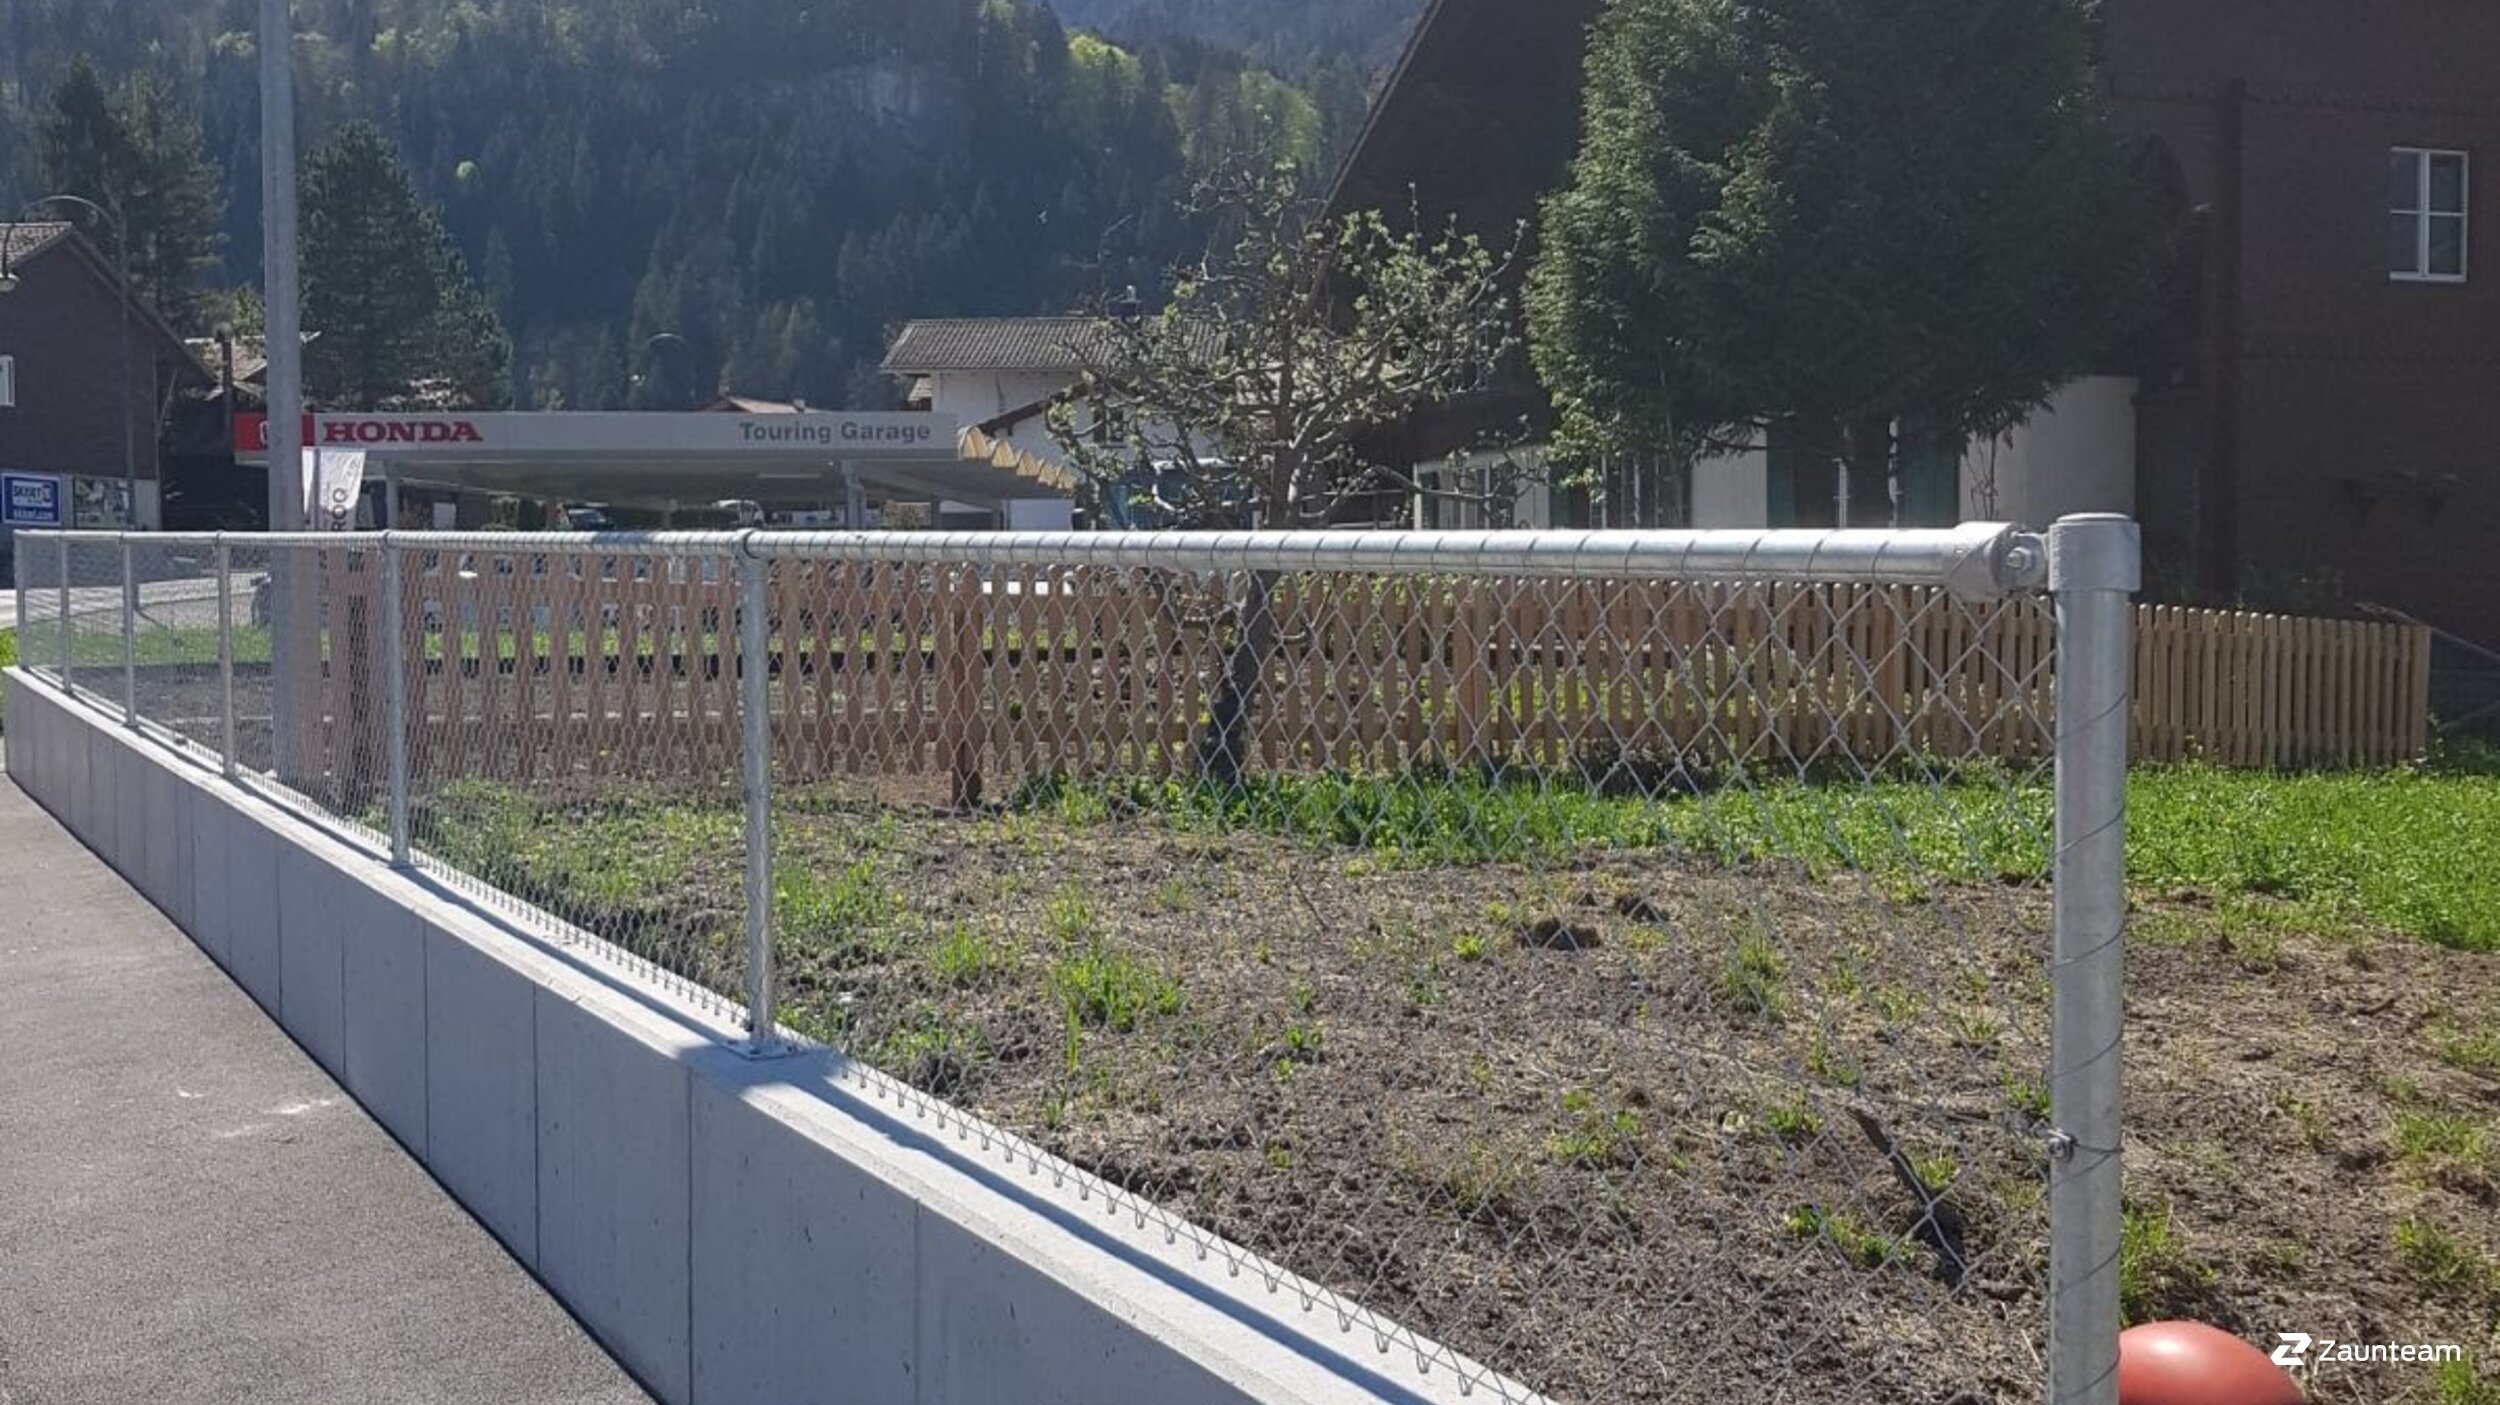 Grillage diagonal de 2018 à 3812 Wilderswil Suisse de Zaunteam Berner Oberland.